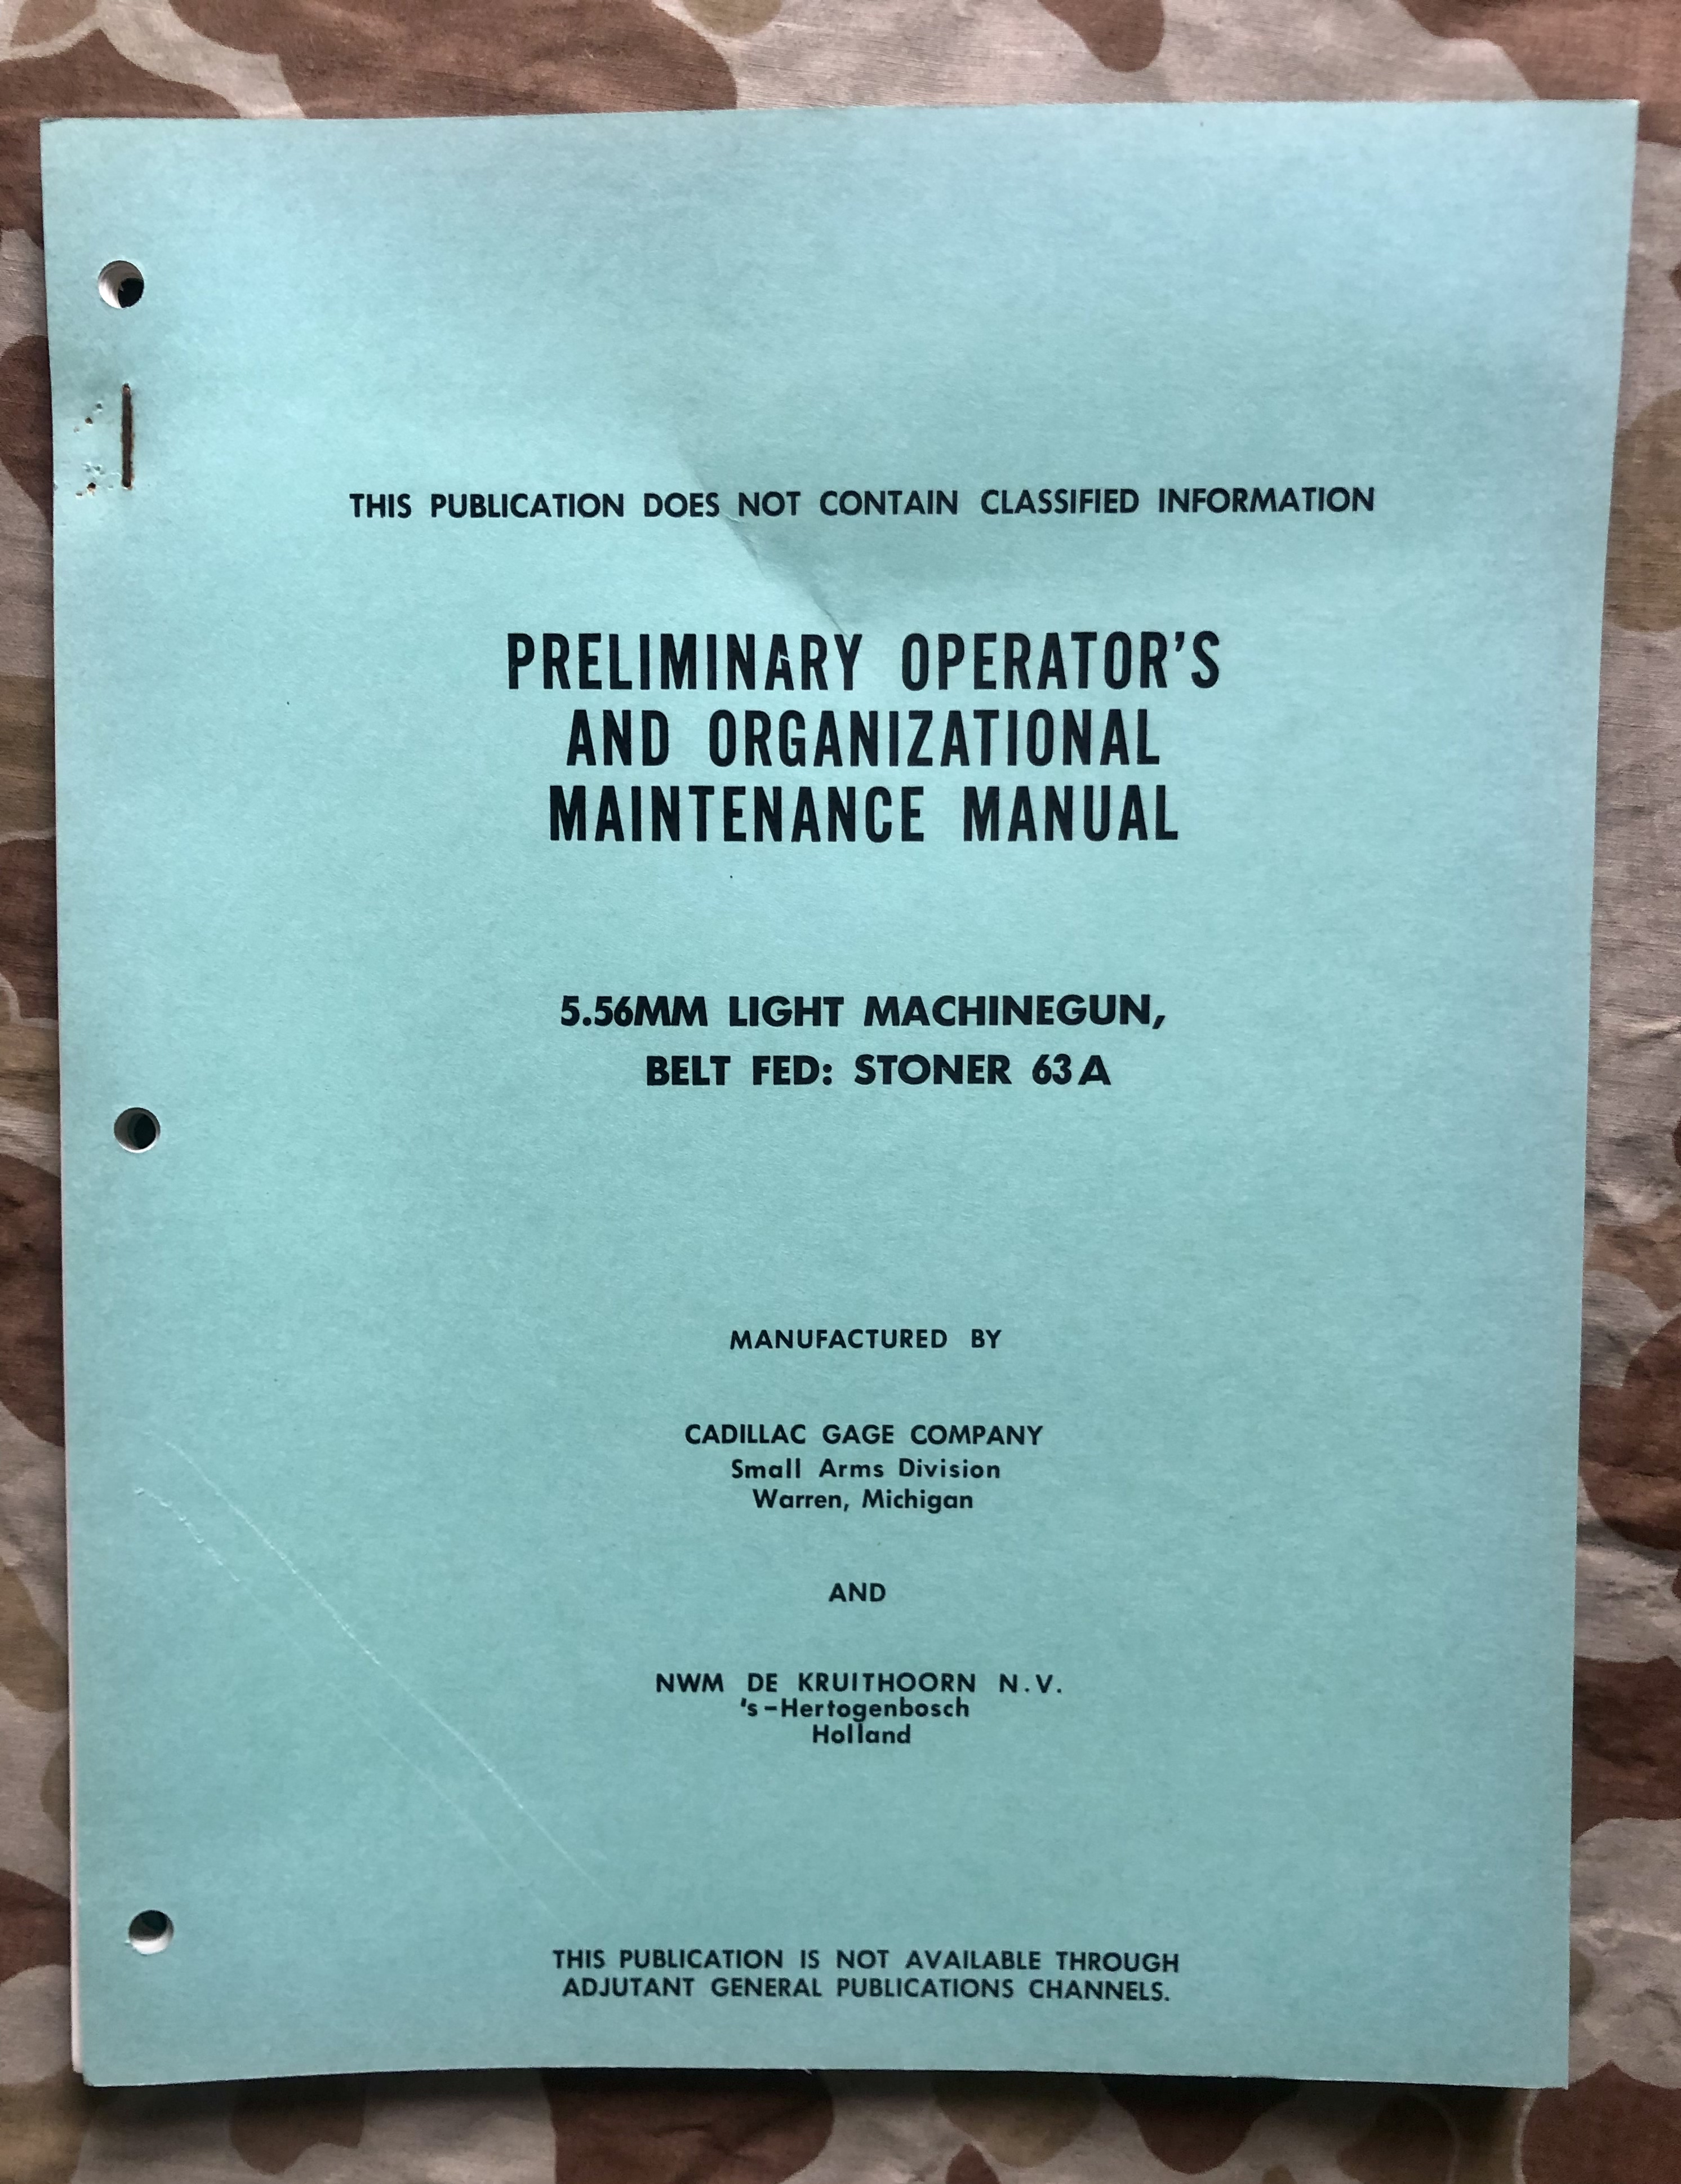 Preliminary operator's and organizational maintenance manual 5.56 mm light machine gun belt fed: STONER 63 A